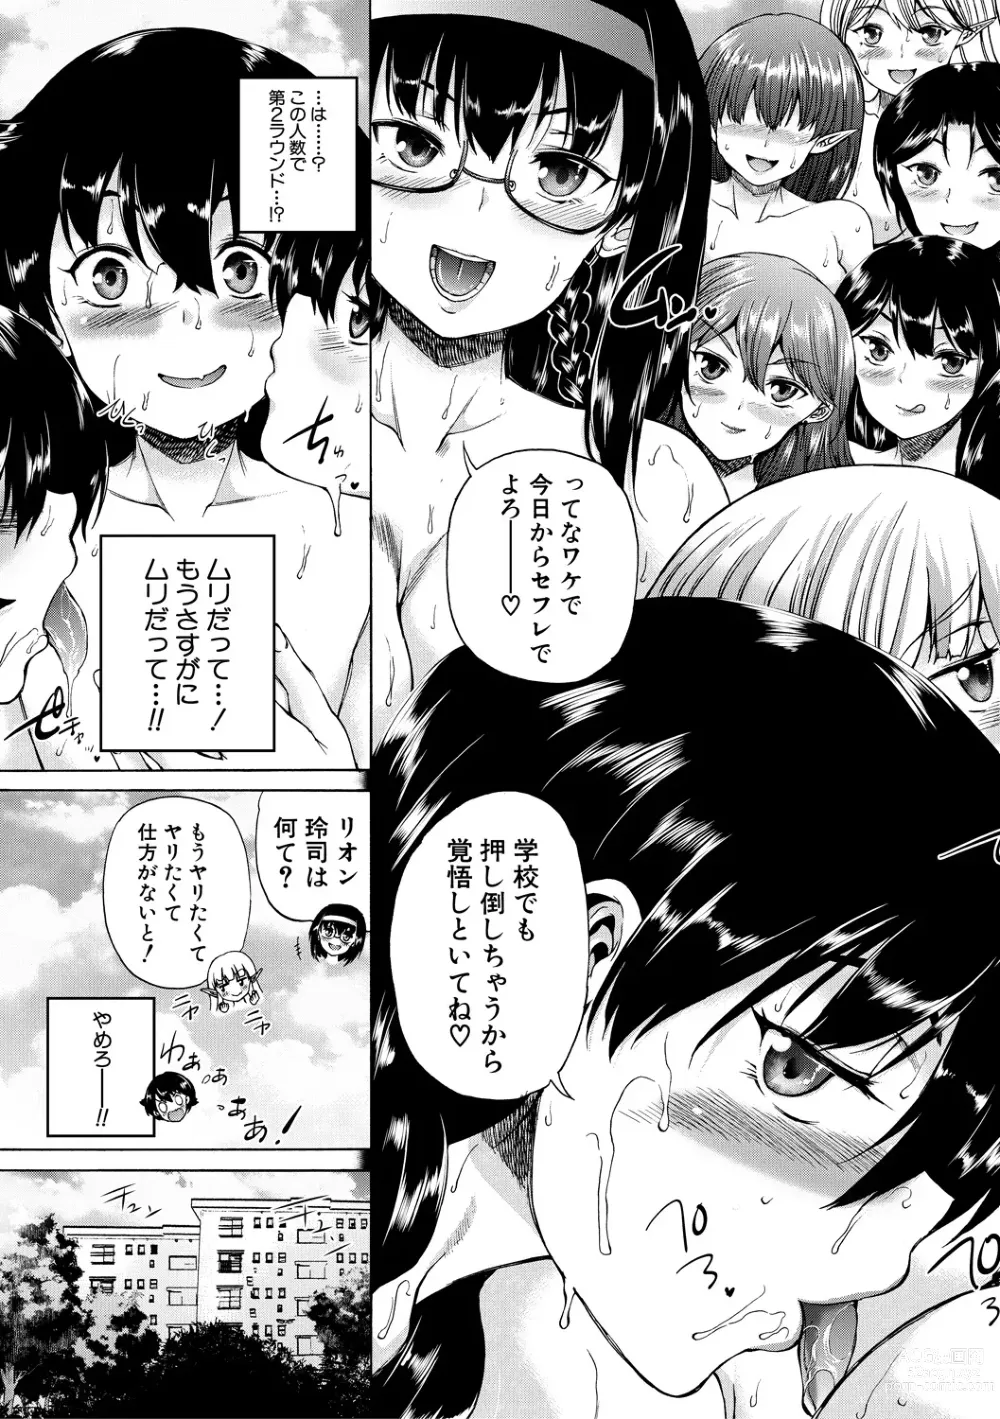 Page 185 of manga Maou Tensei Harem - Devil Reincarnation